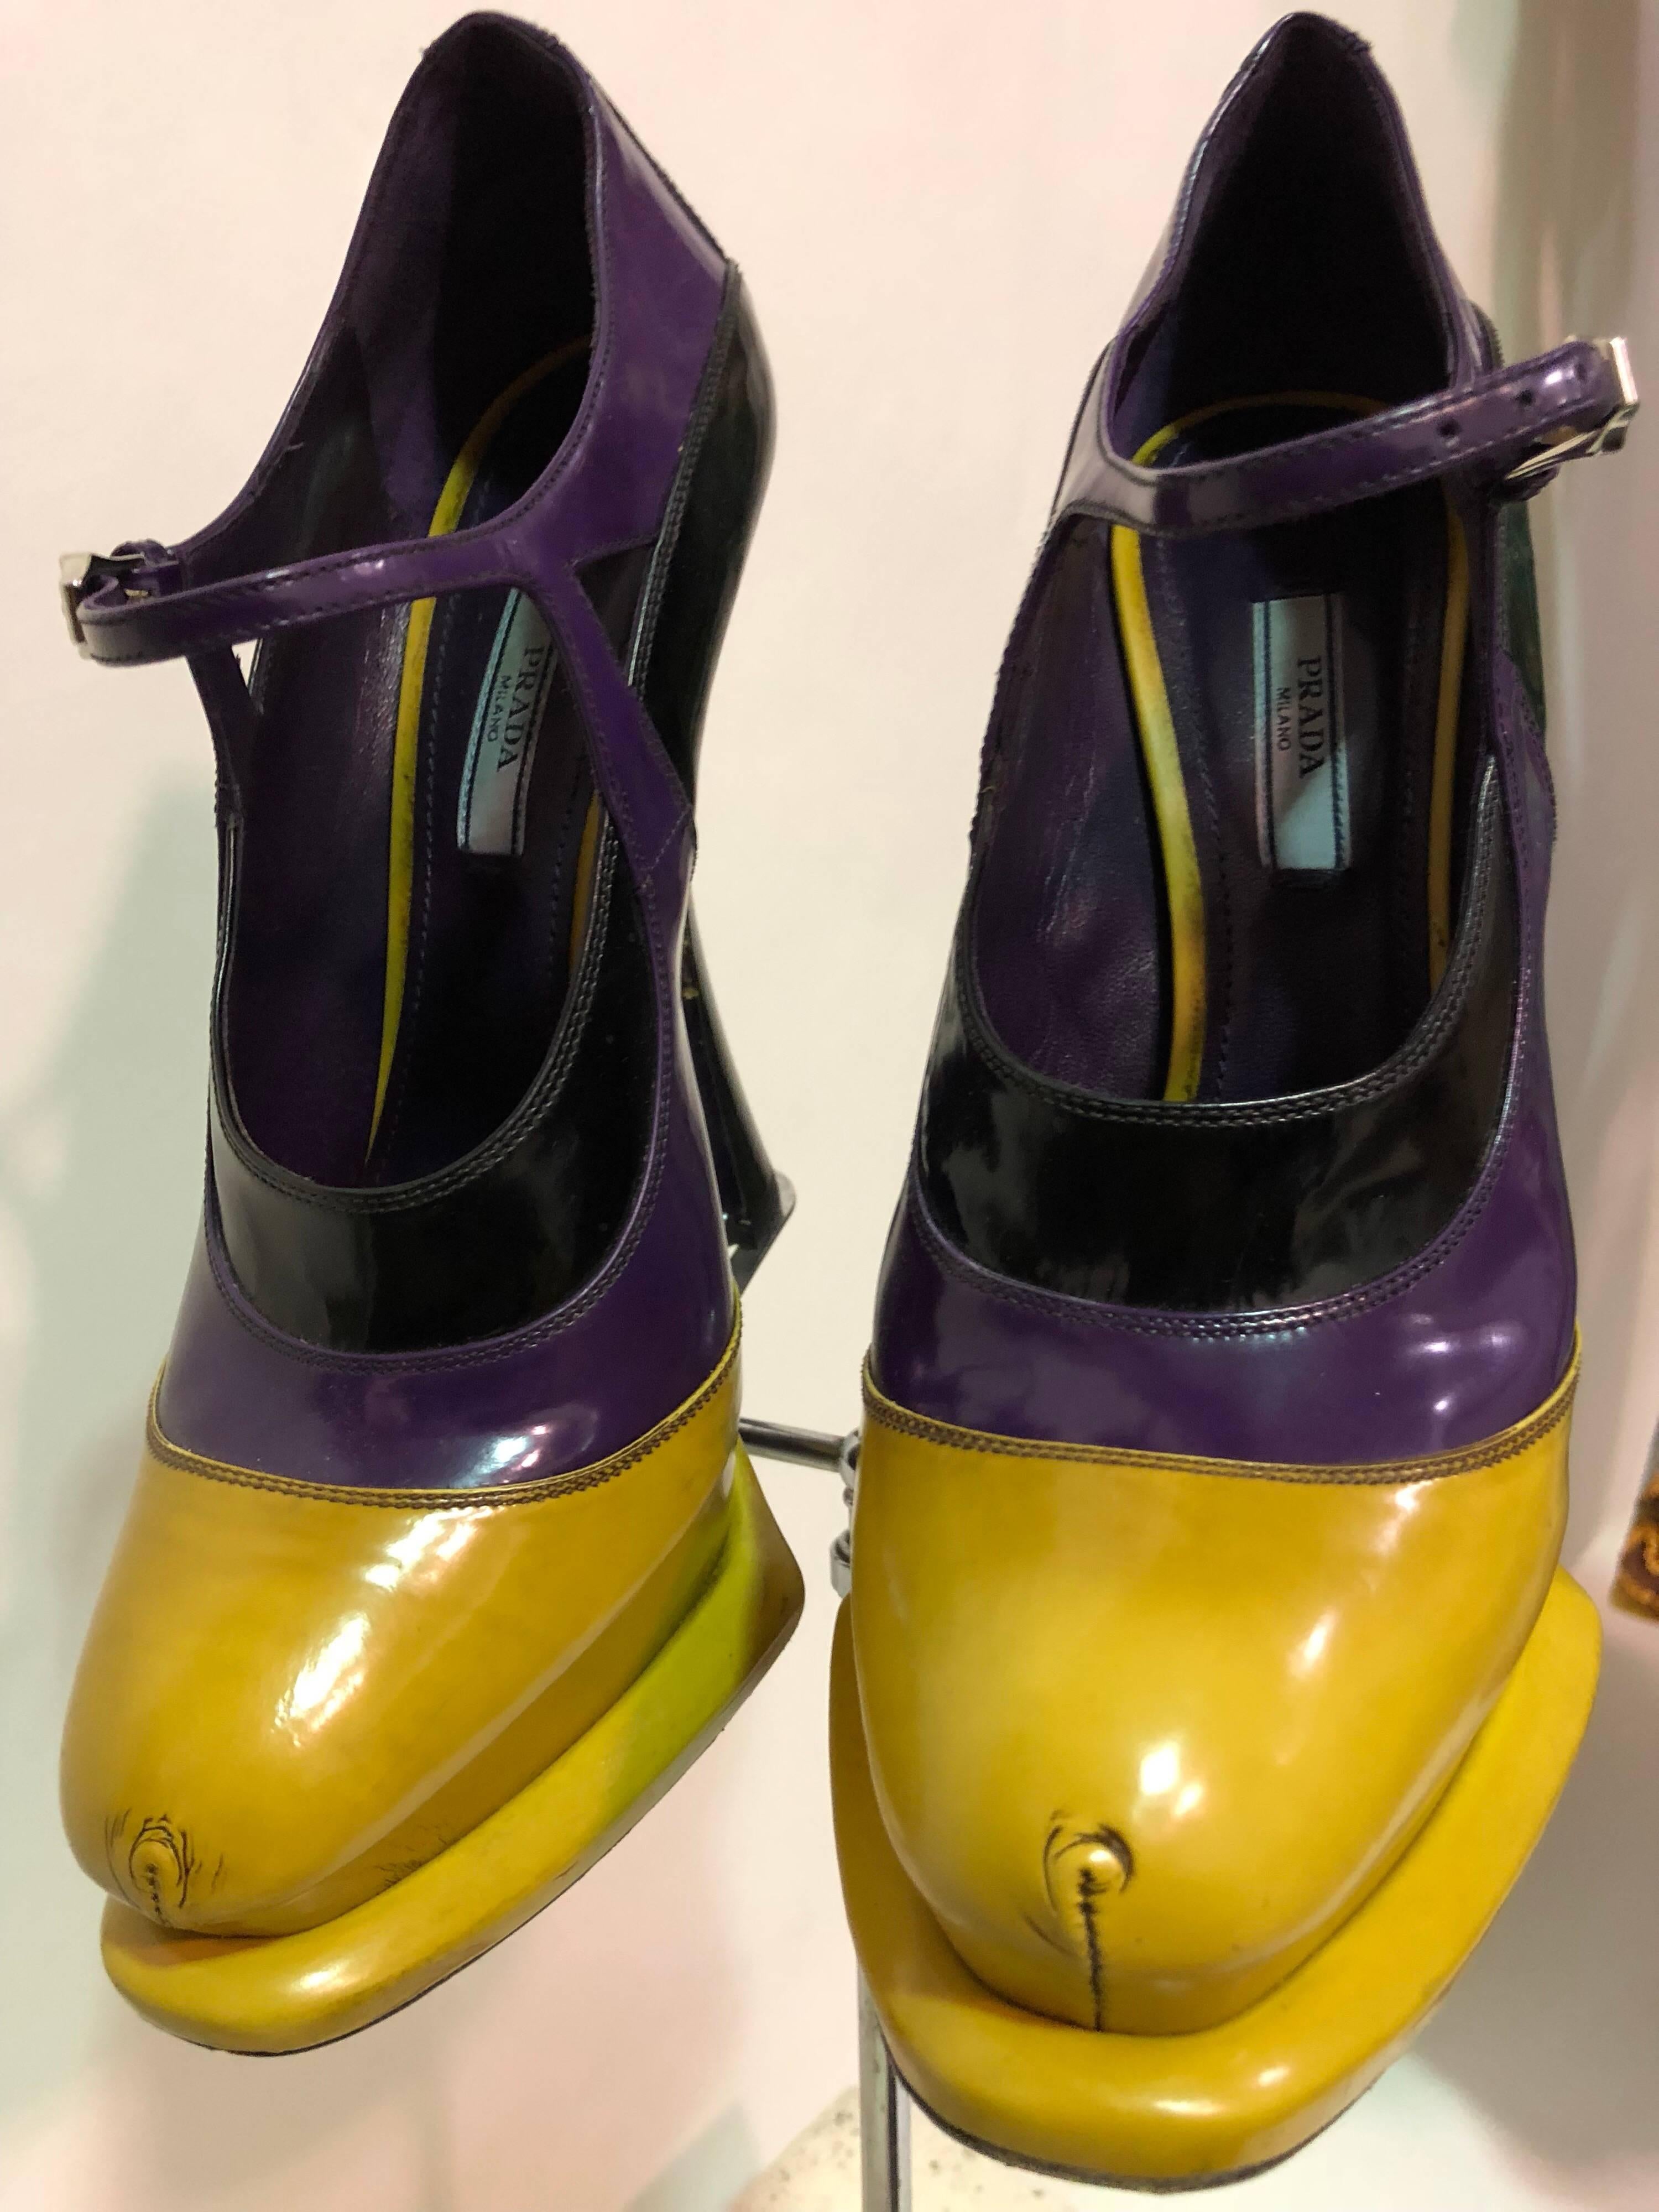 Prada canary yellow, purple and black fetish-style leather 